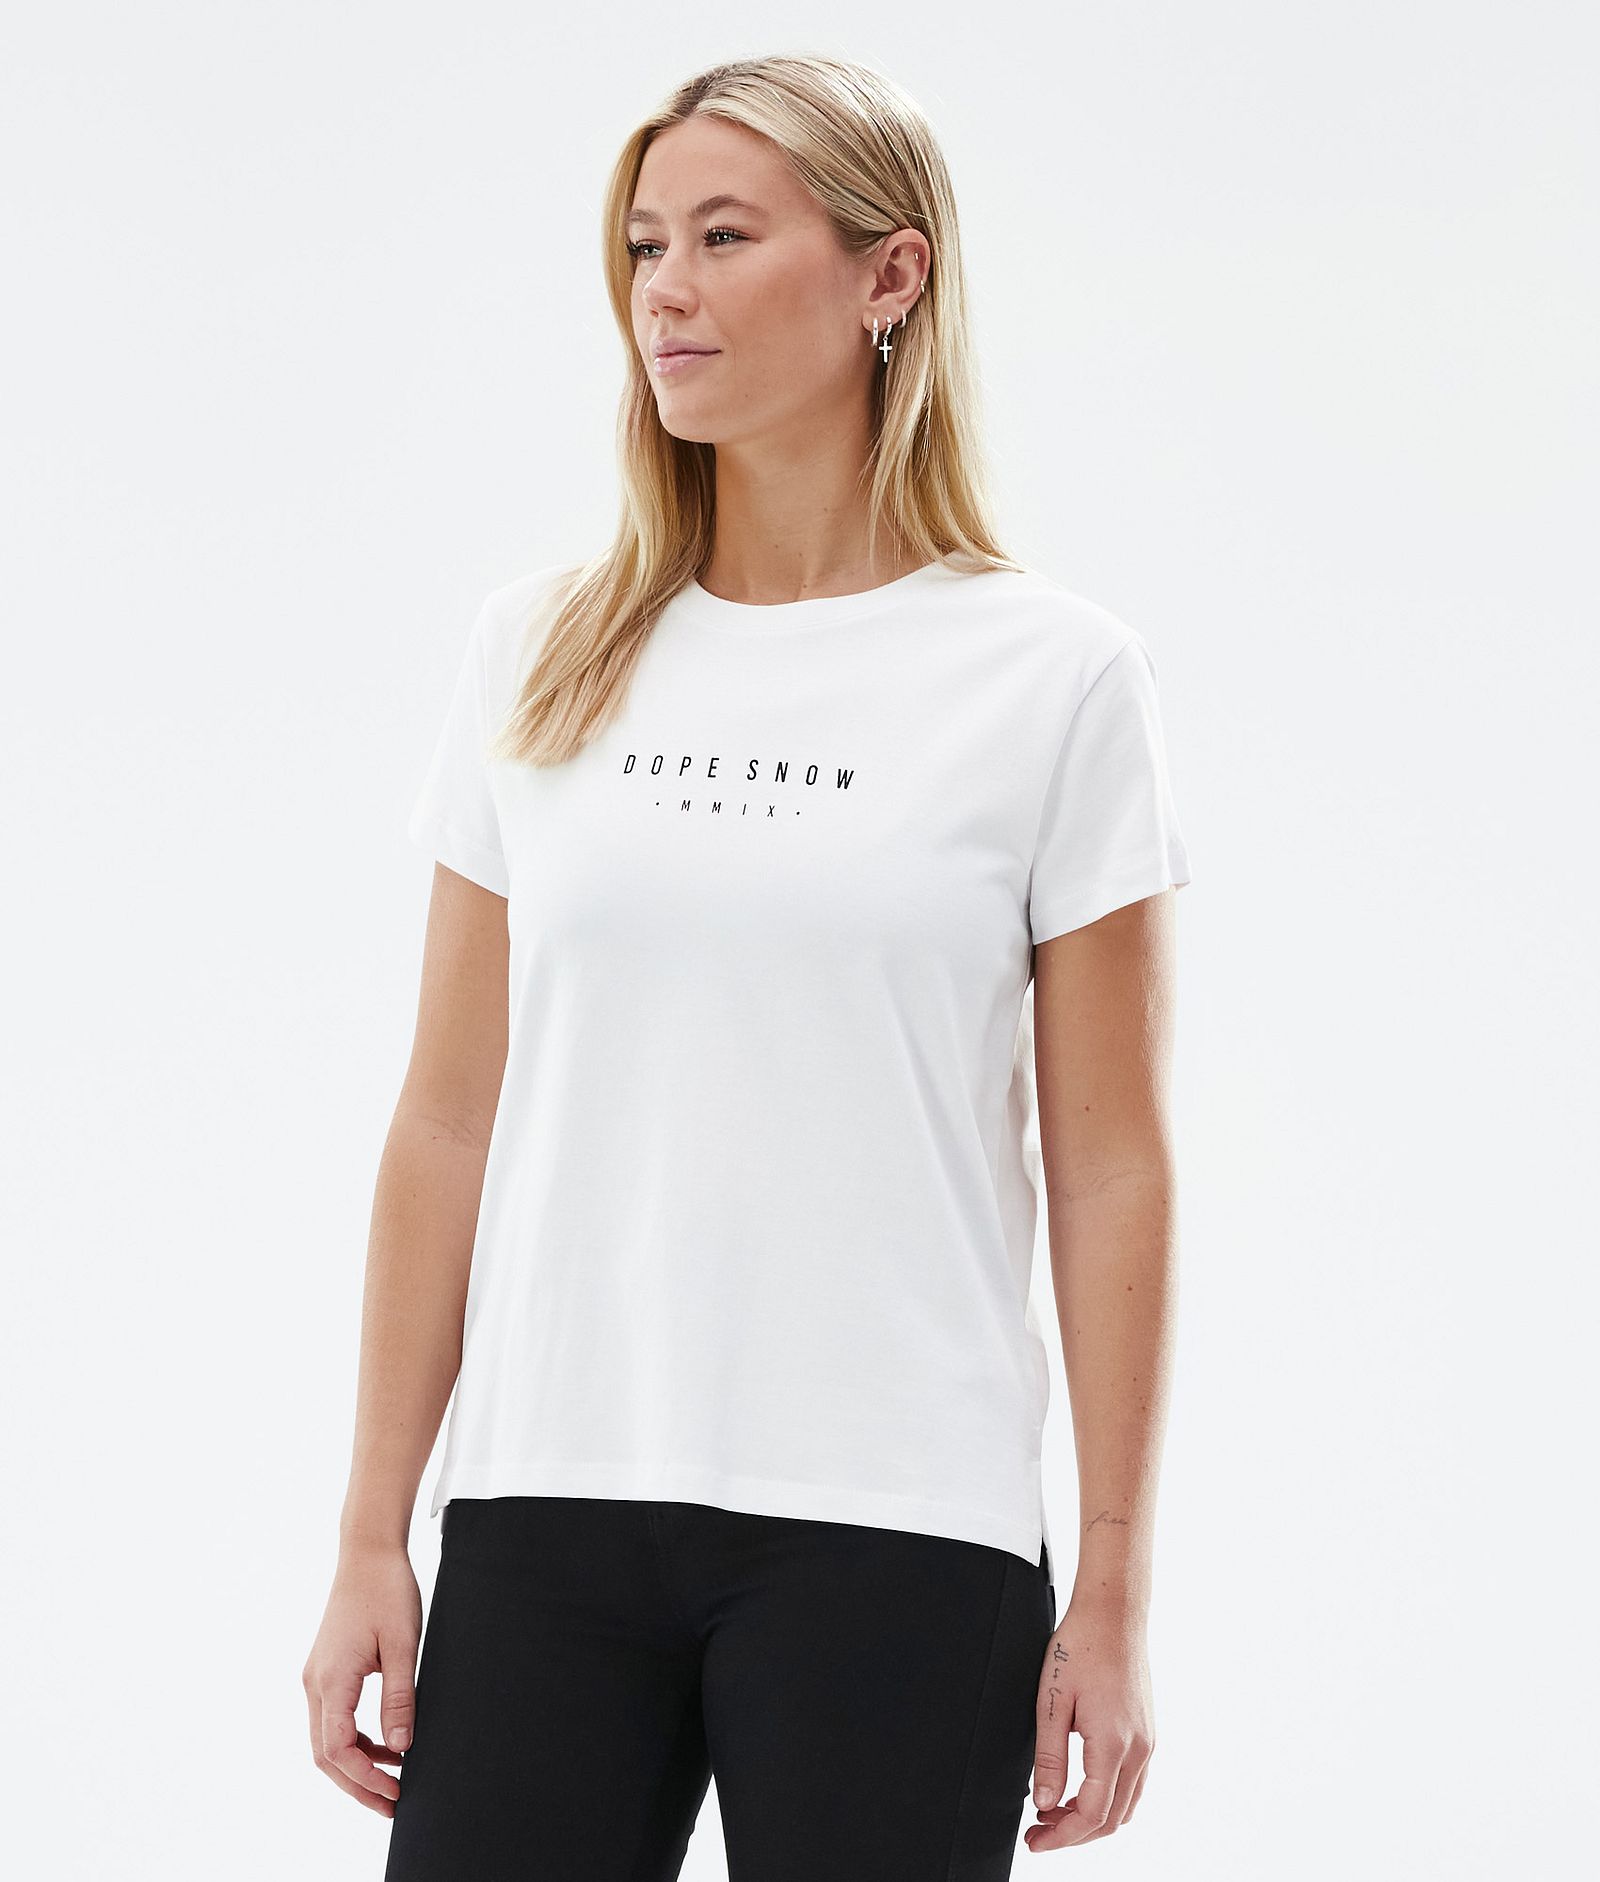 Standard W Camiseta Mujer Silhouette White